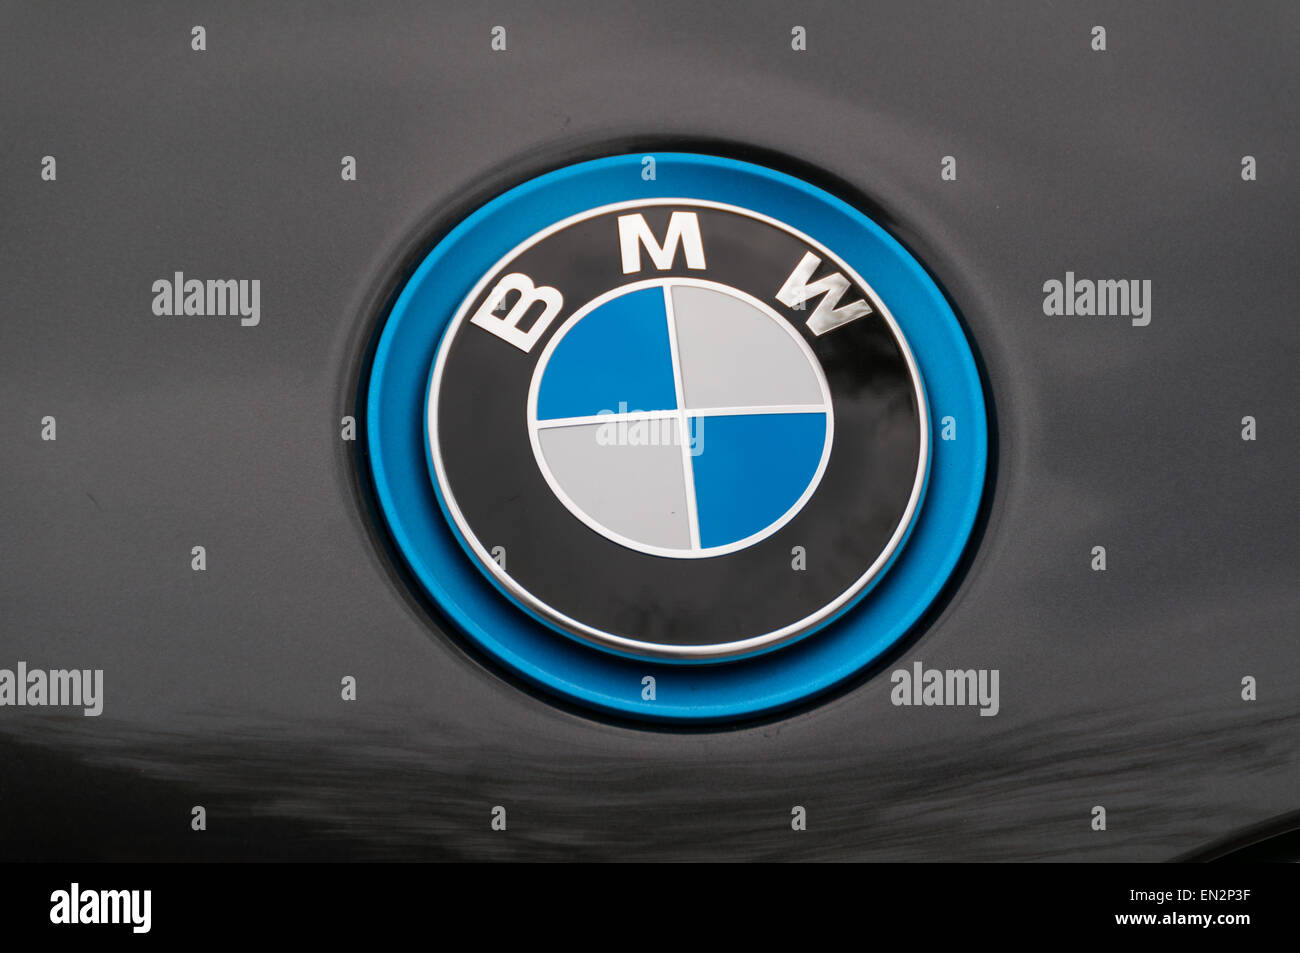 Blu emblema BMW su sfondo nero Foto stock - Alamy